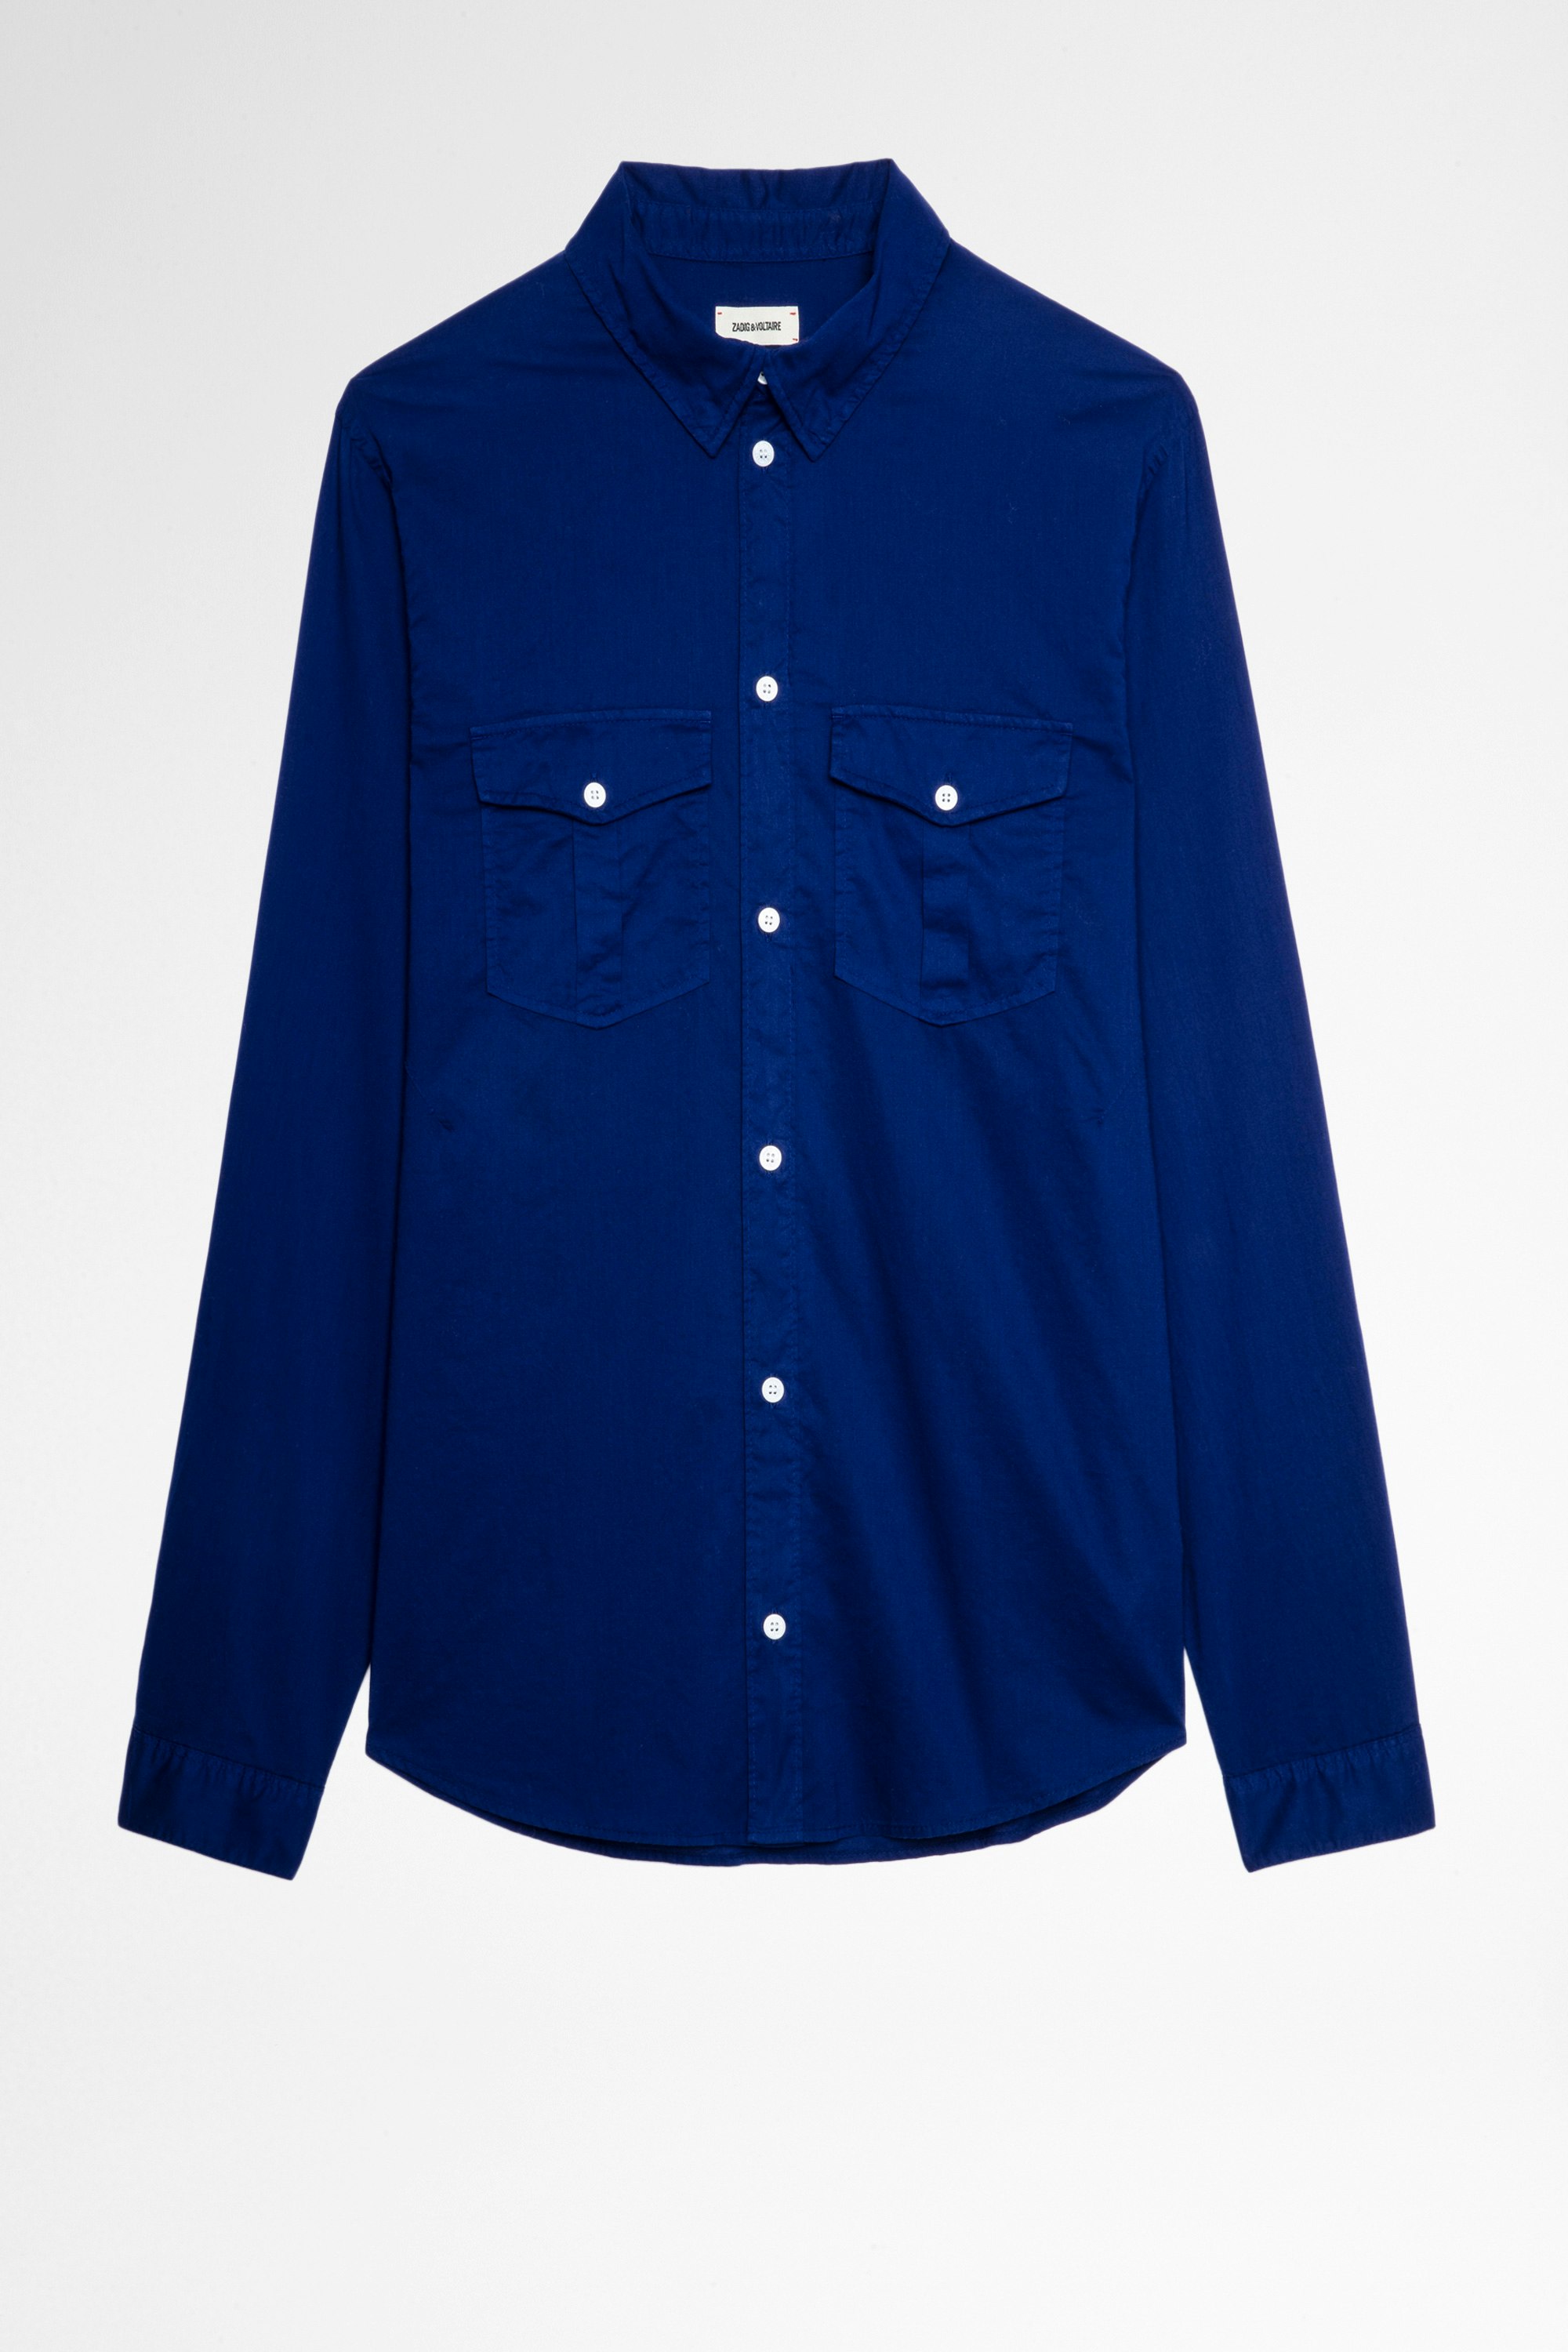 Camisa Thibaut Camisa de algodón azul real para hombre